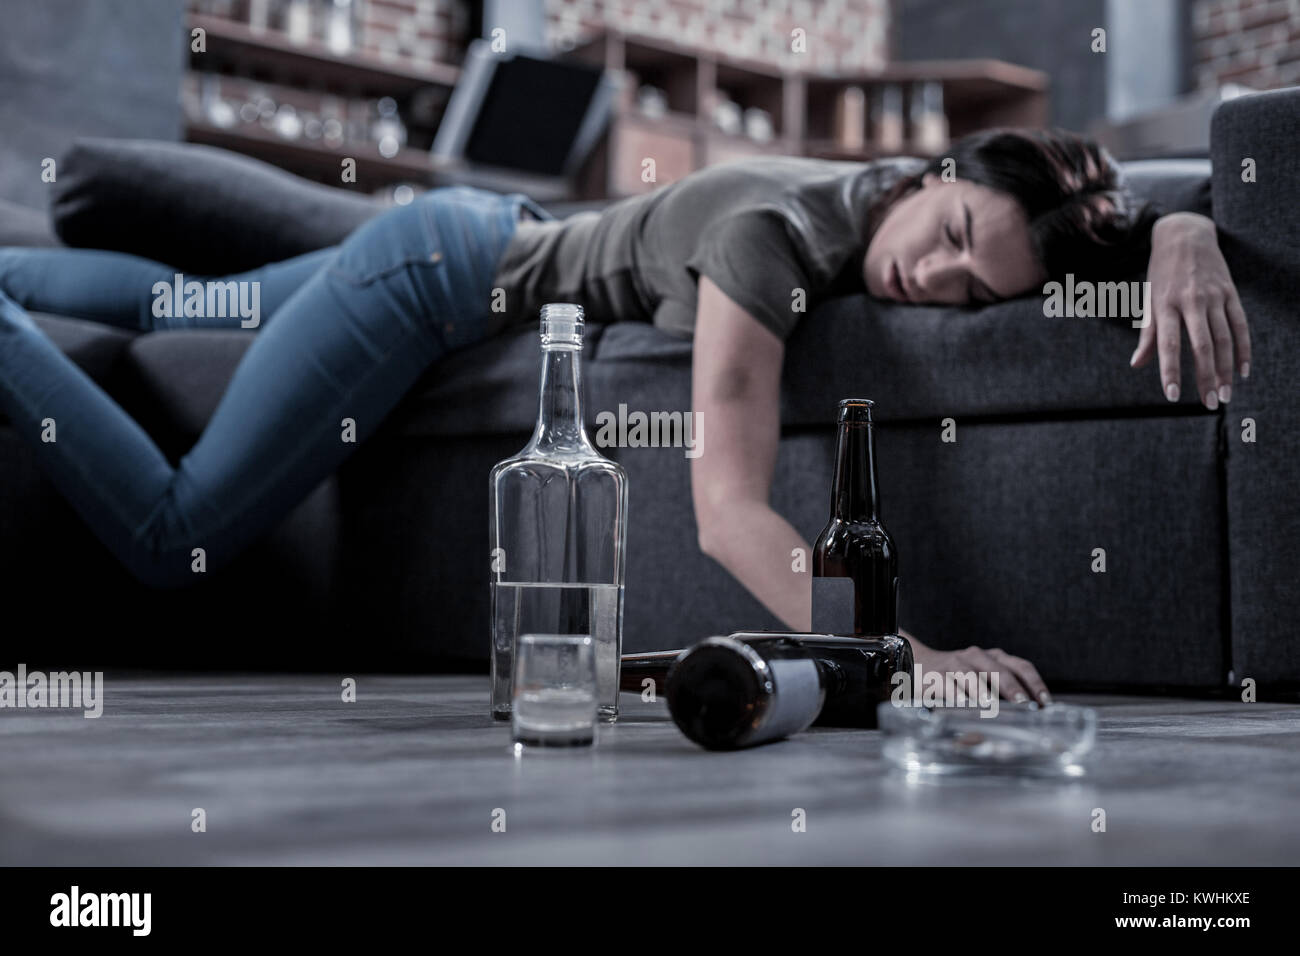 Half empty bottle of vodka standing on the floor Stock Photo